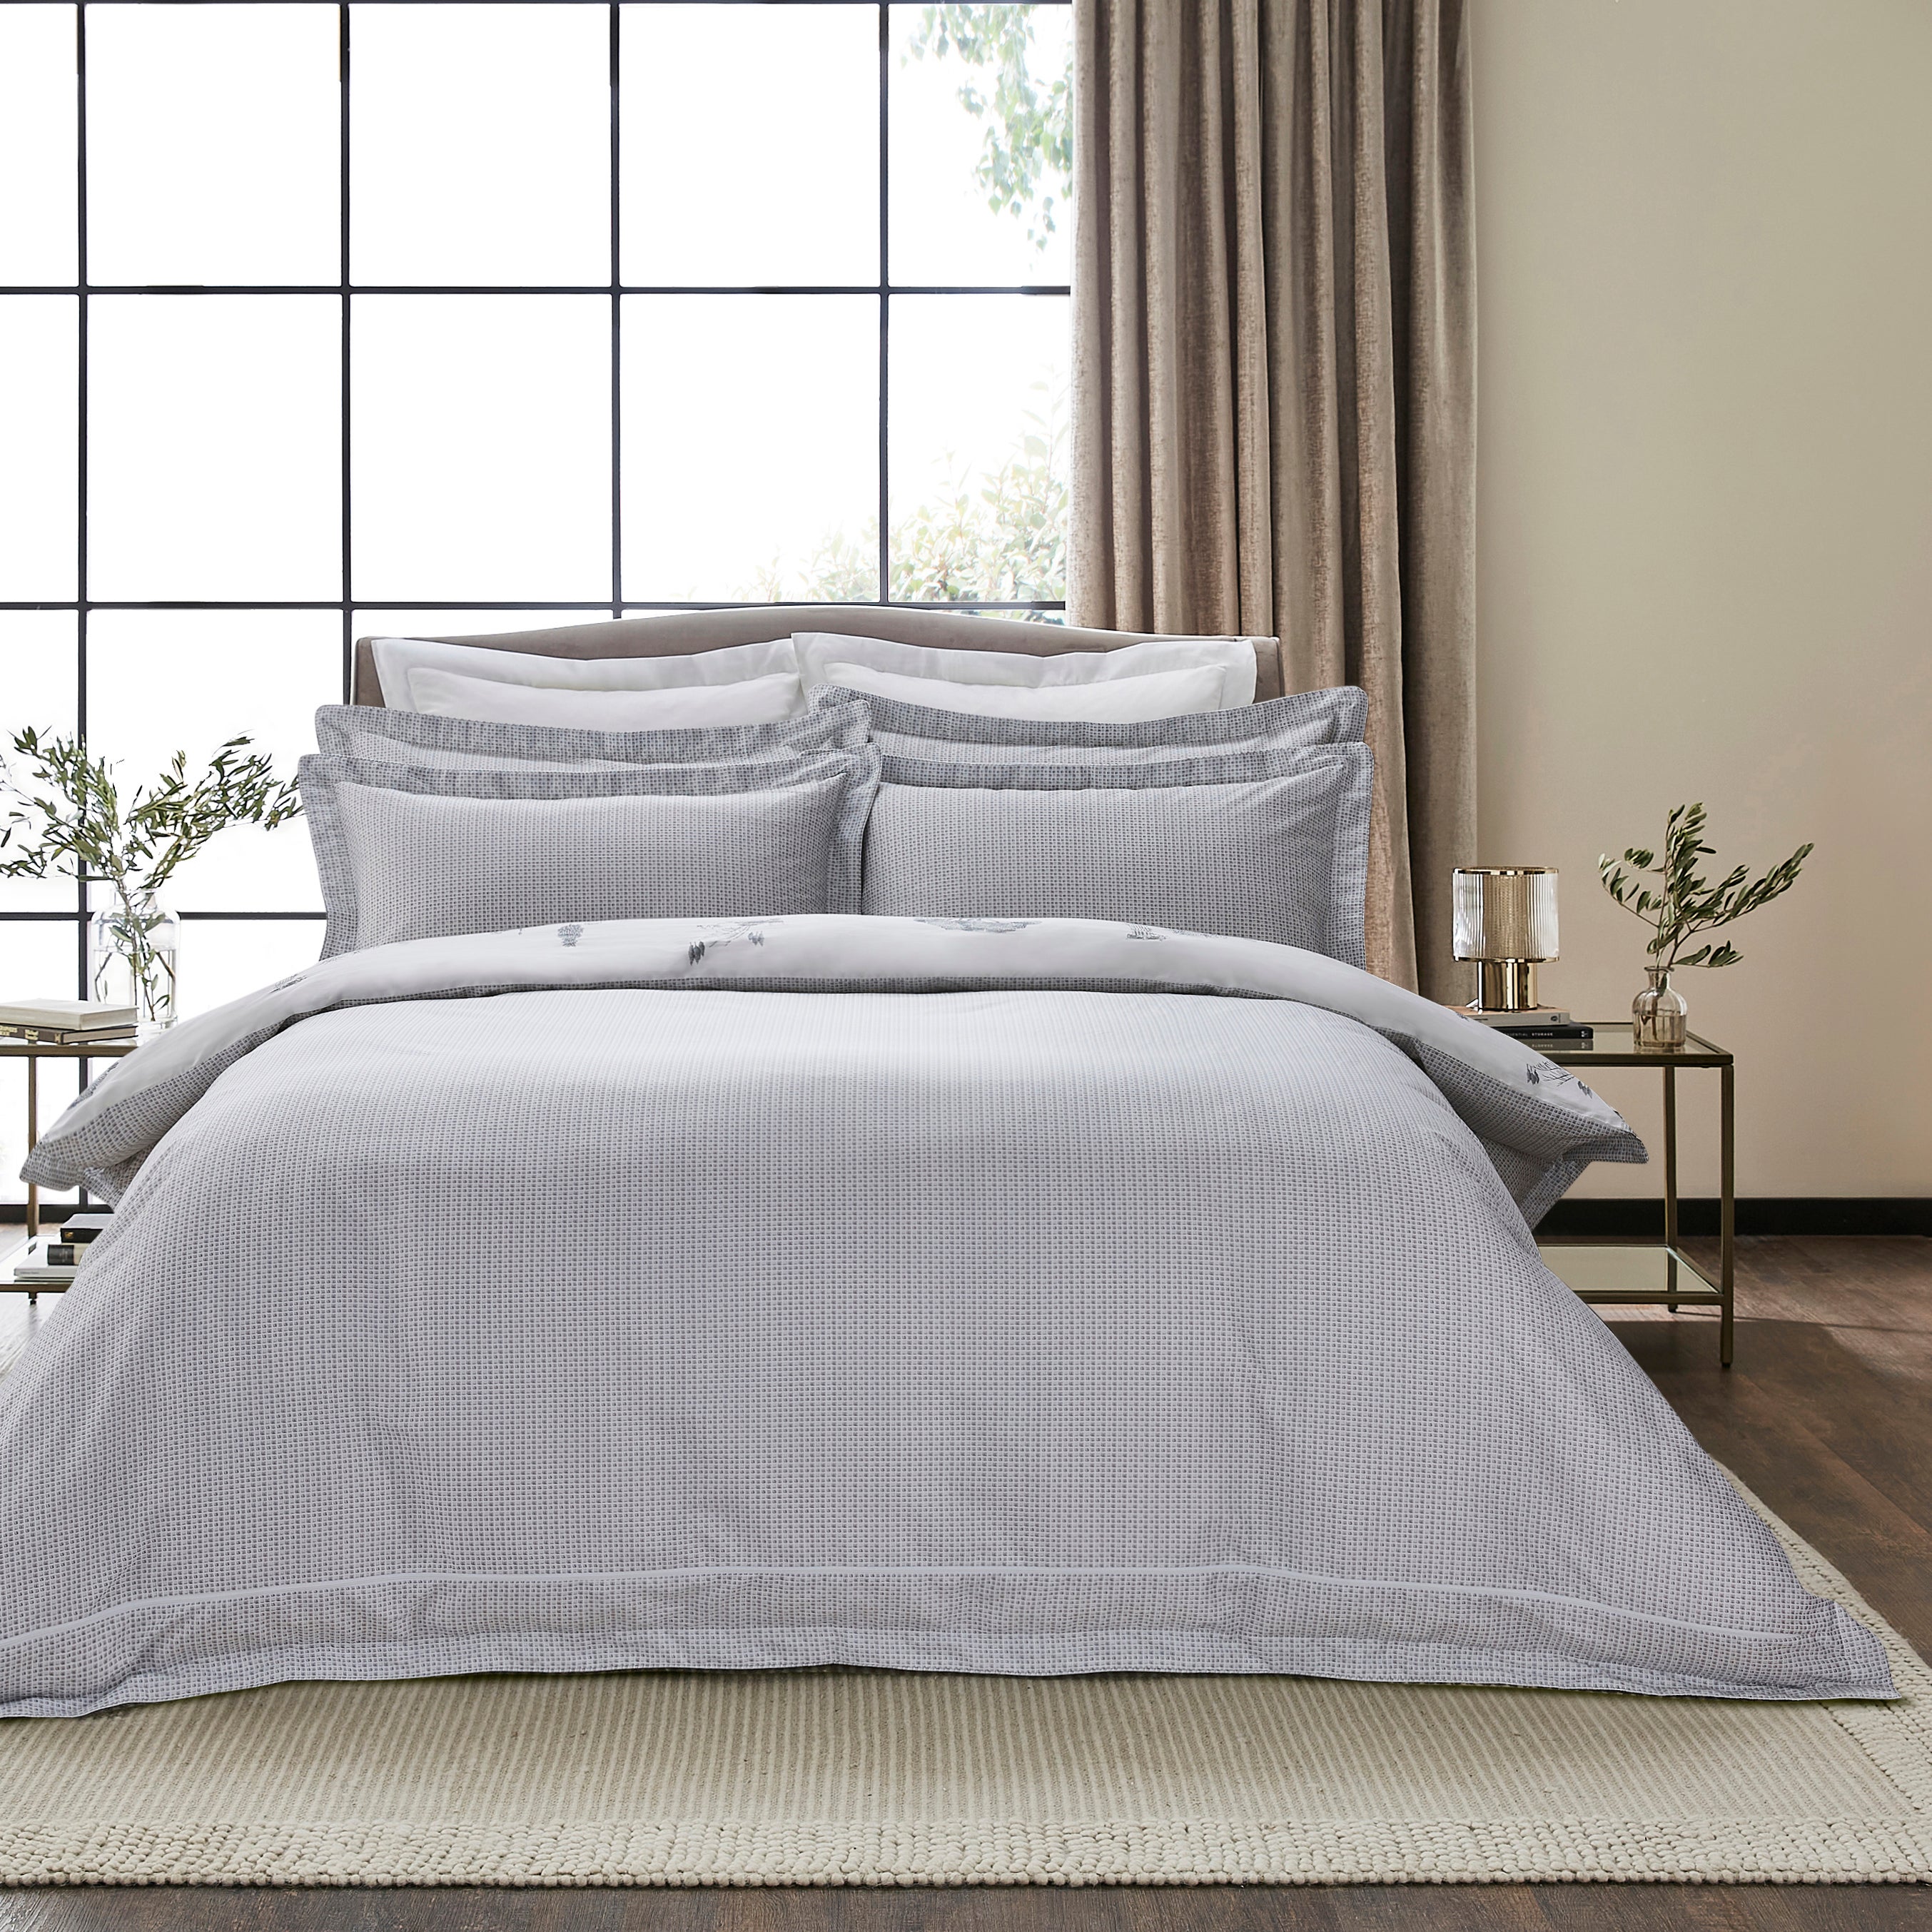 Dorma Pelion Toile Slate Cotton Duvet Cover and Pillowcase Set | Dunelm